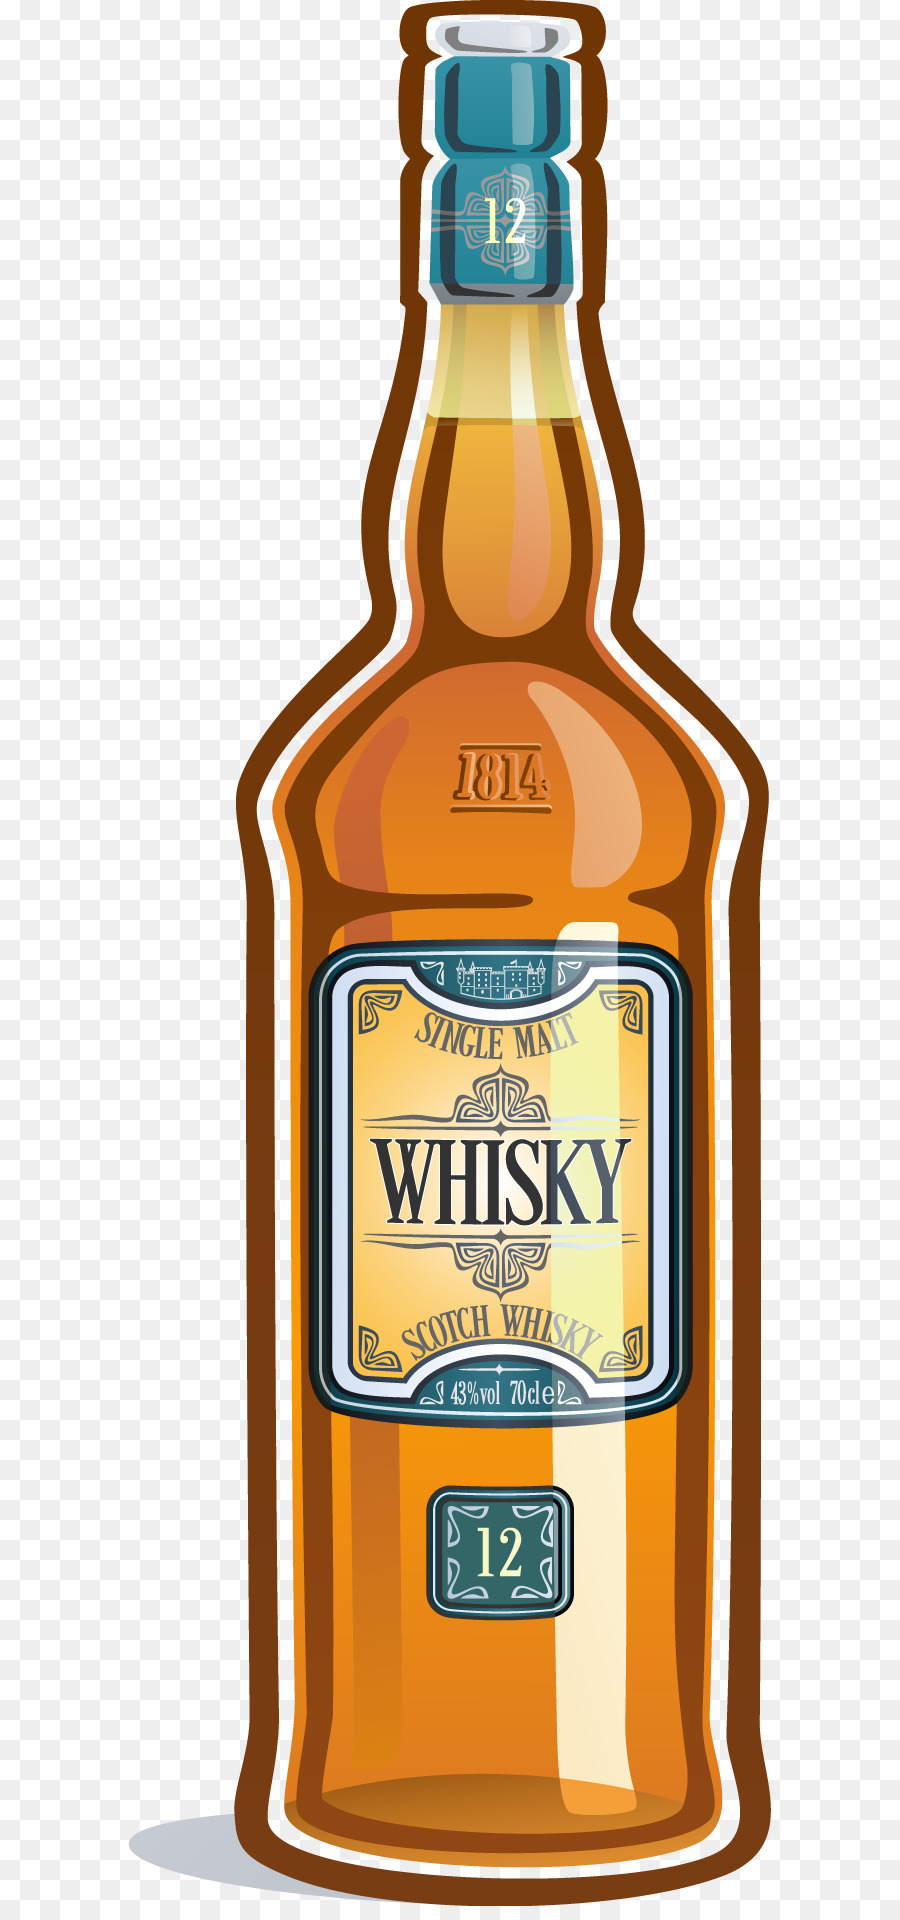 Whisky Birra, del Vino Tennessee whisky Liquore - decorativo bottiglie